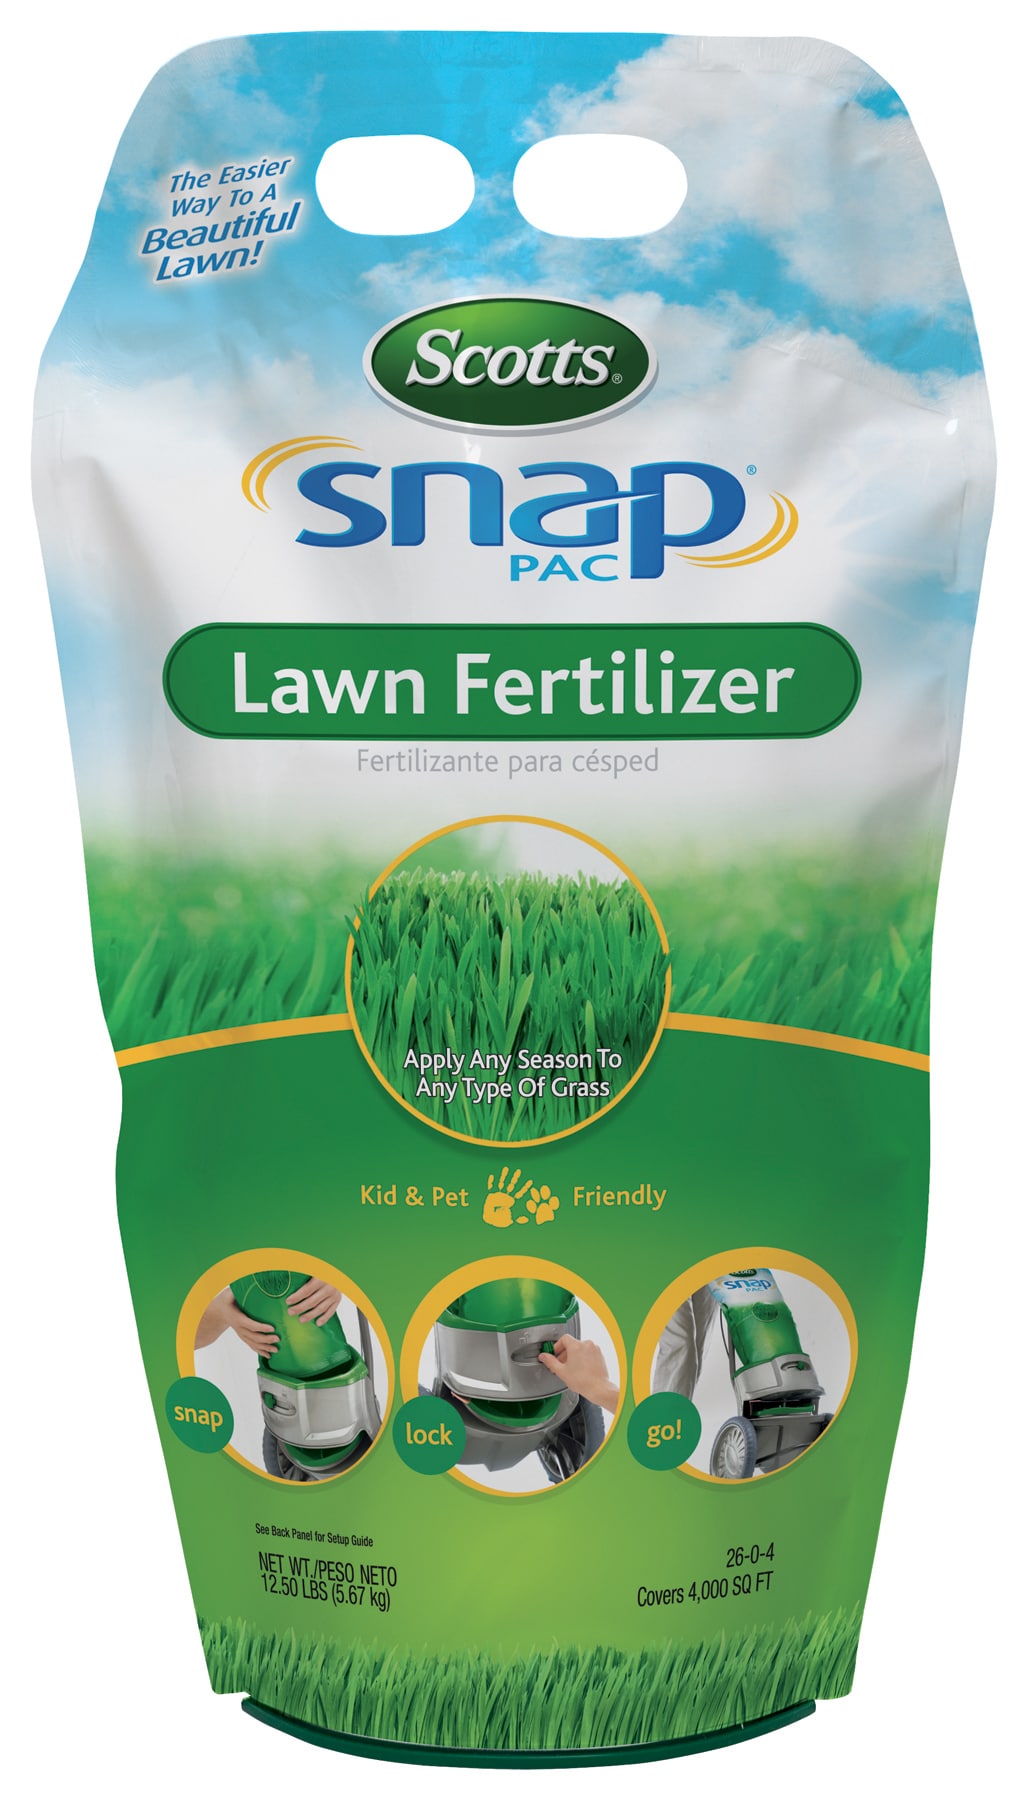 Scotts Snap Pac 13.42-lb 4000-sq ft 26-0-4 All-purpose Fertilizer at 